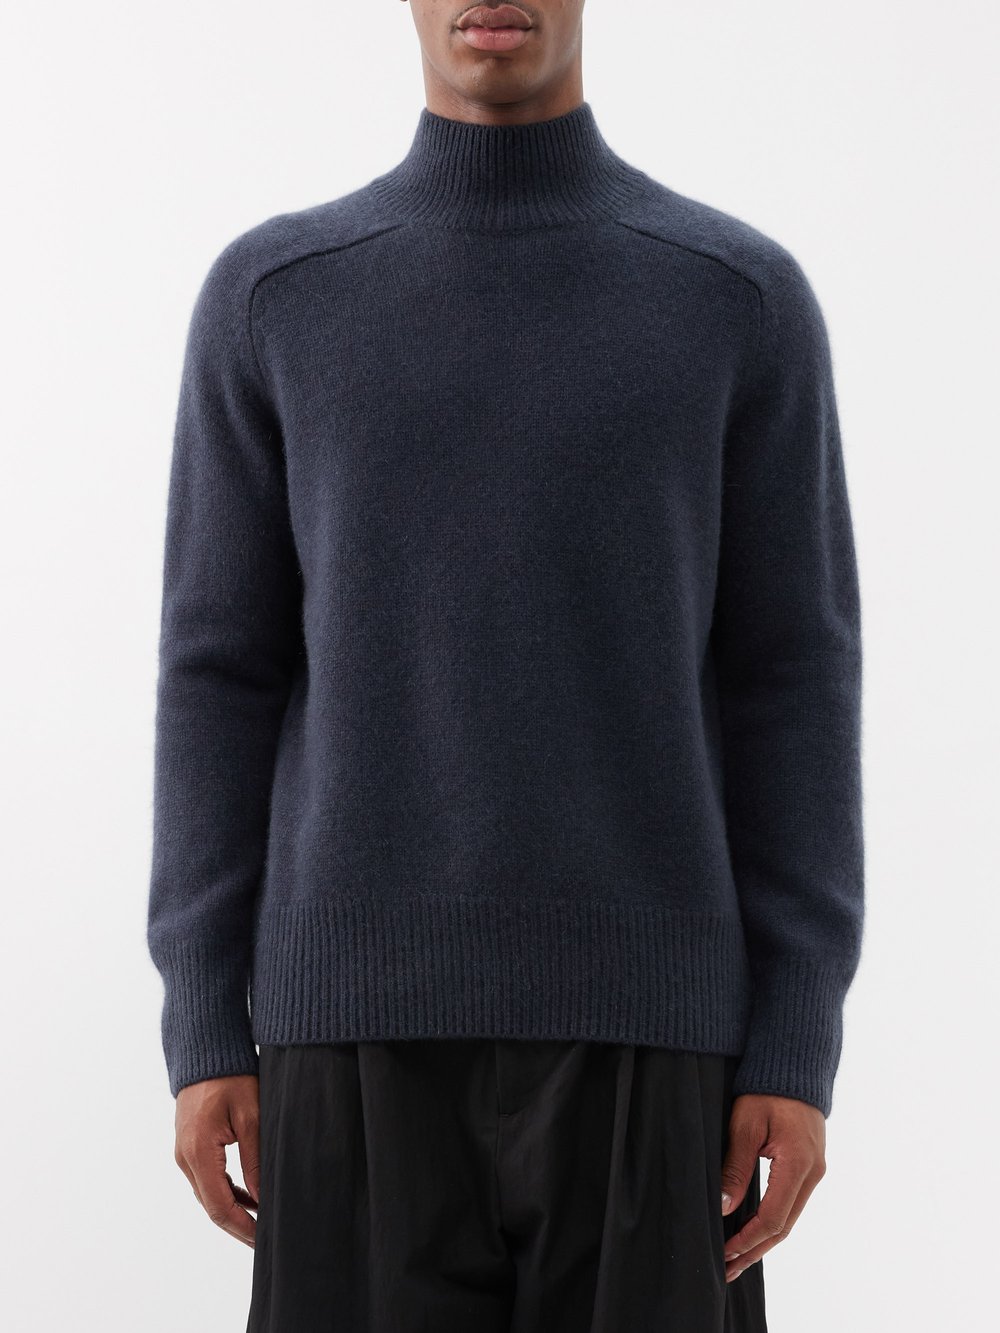 цена Кашемировый свитер mr edith grove с рукавами реглан Arch4, серый